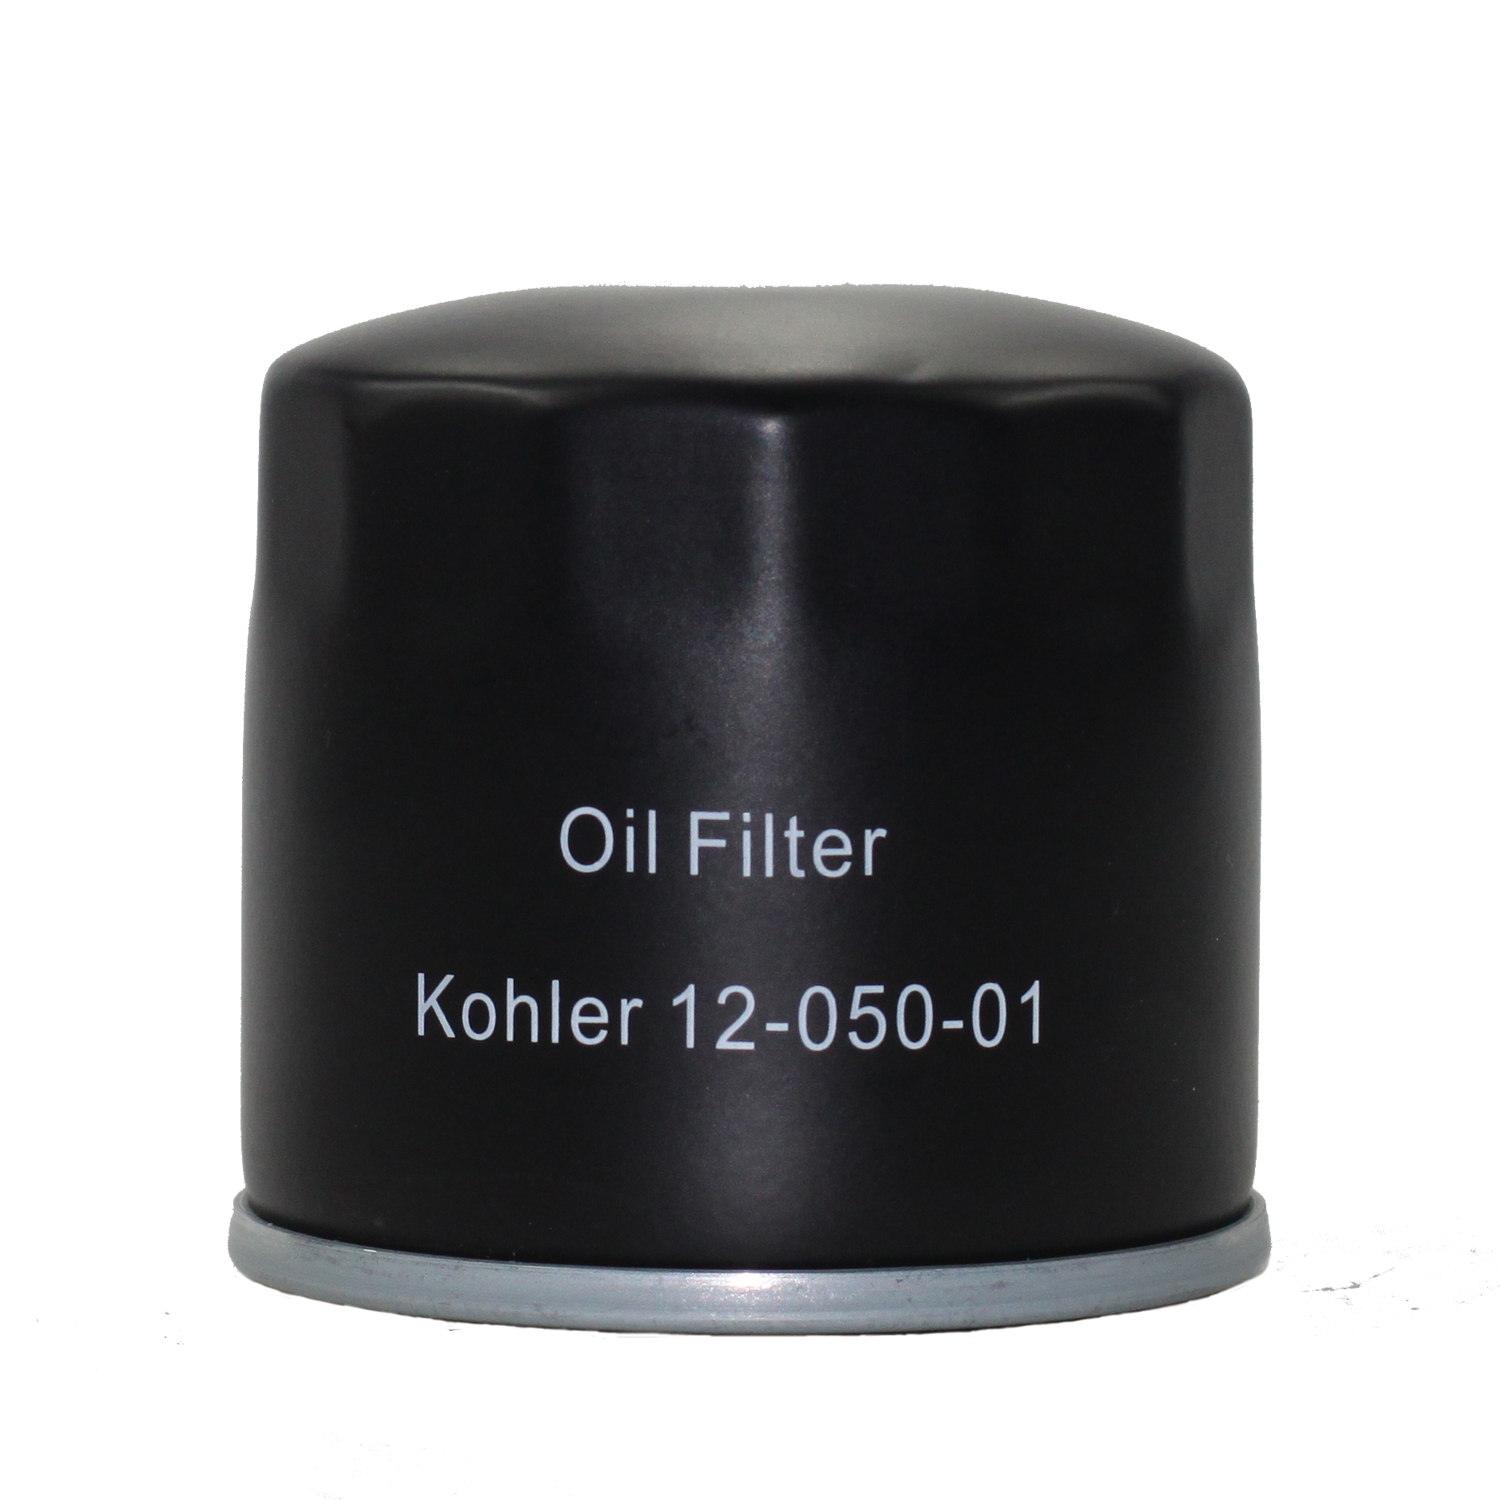 Replacement Oil Filter for Kohler 12 050 01, 12 050 08, Ariens 08200204, 21397200